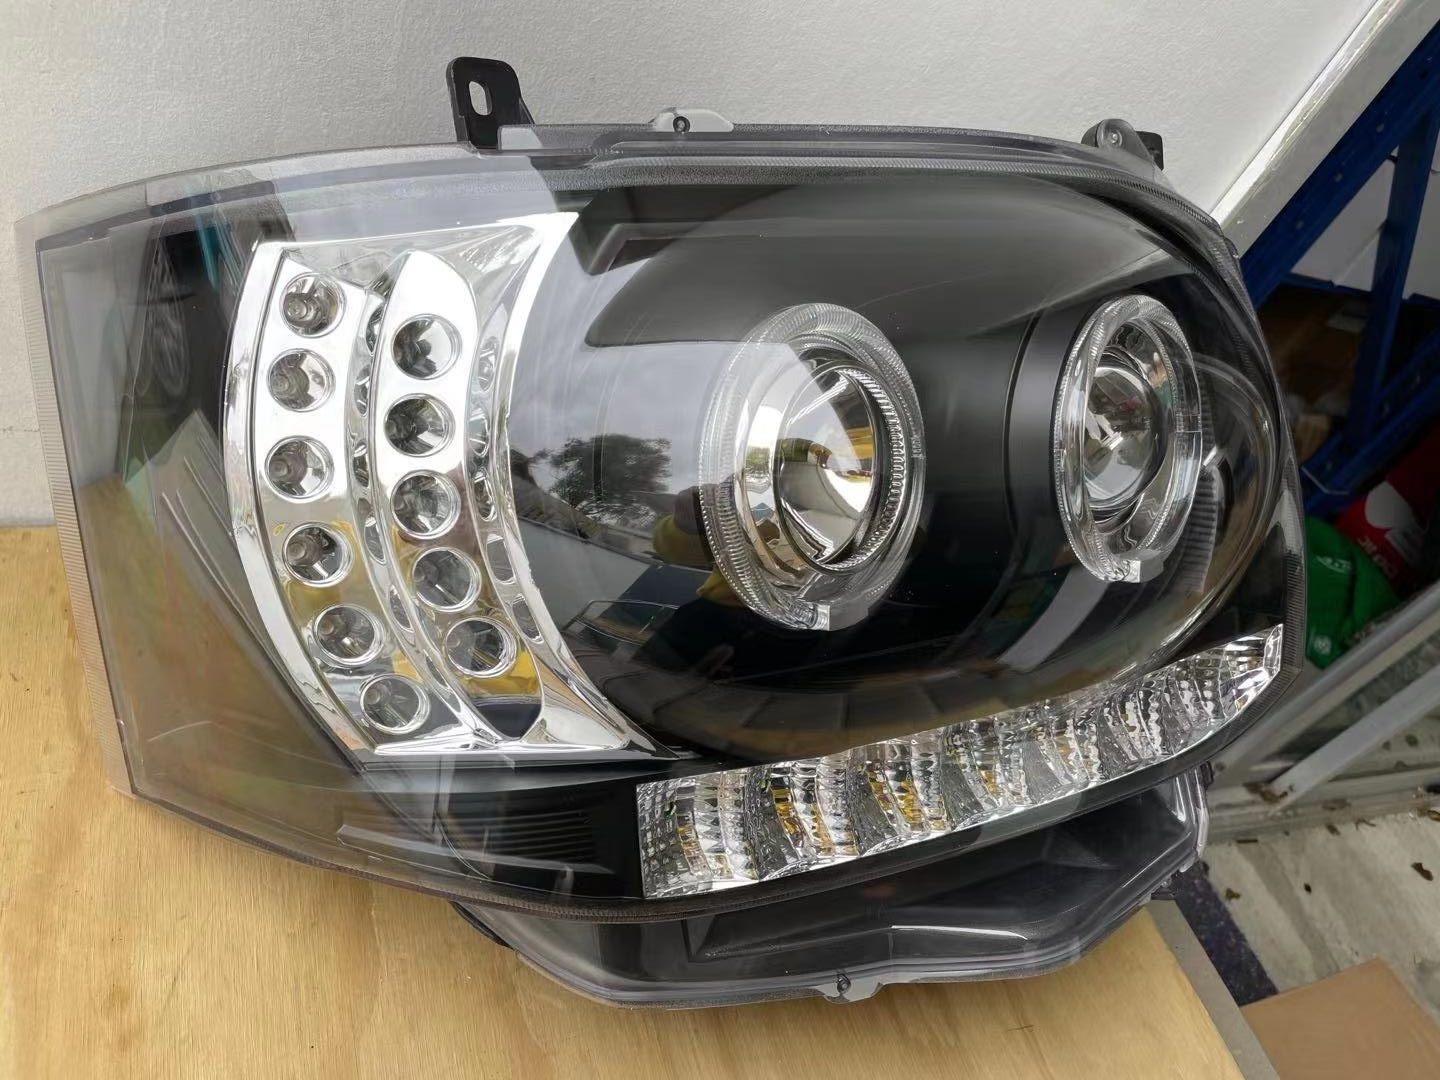 LED Kennzeichenbeleuchtung Toyota Hiace H200, 4,99 €